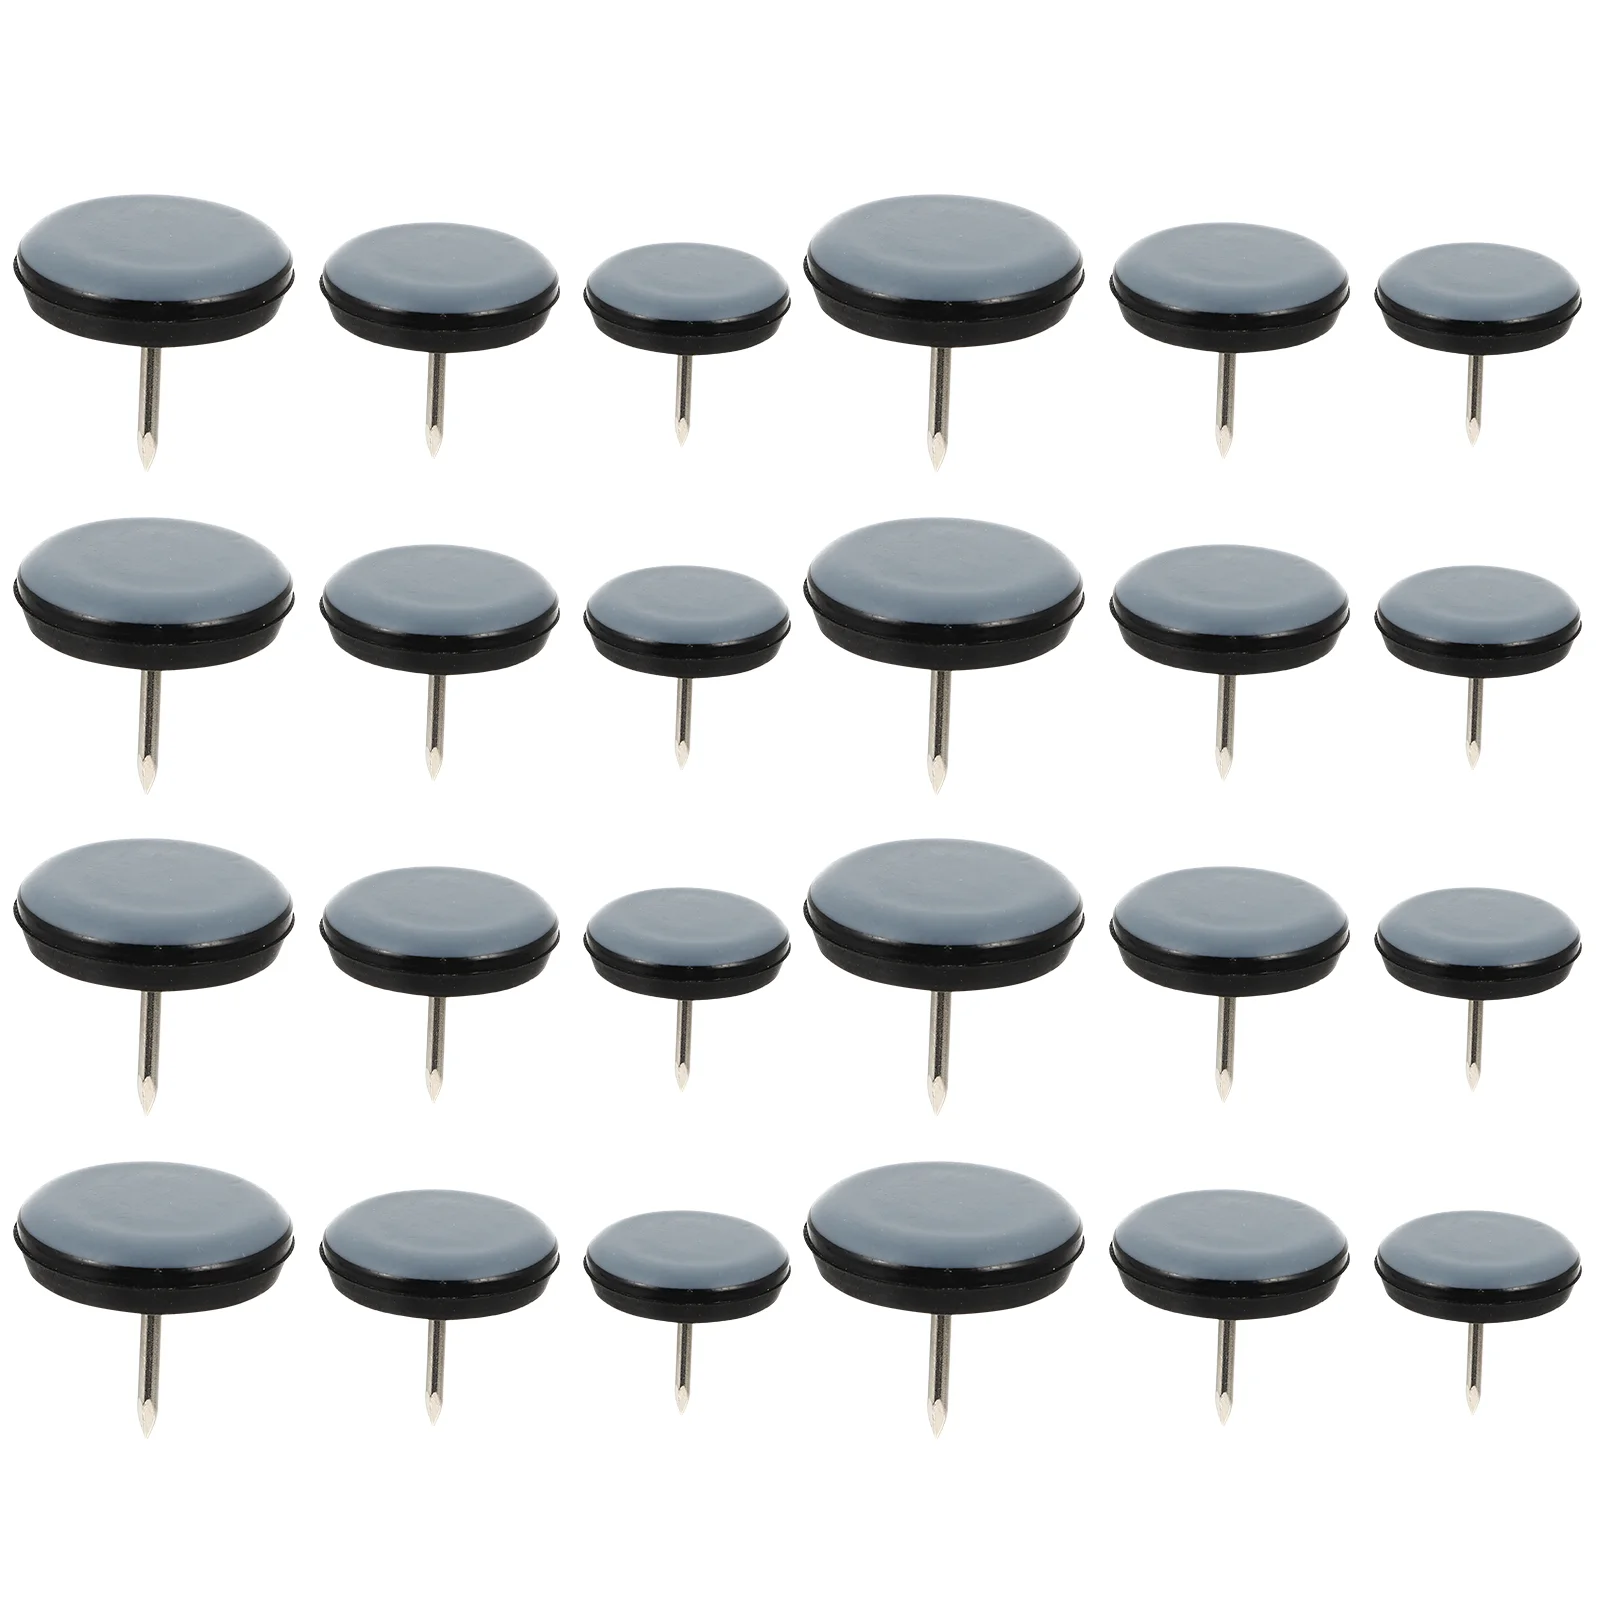 

24 Pcs Glide Pad Chair Glides Carpet Floors Leg Protectors Desk Tile Astetic Room Decor Nail Hardwood Furniture